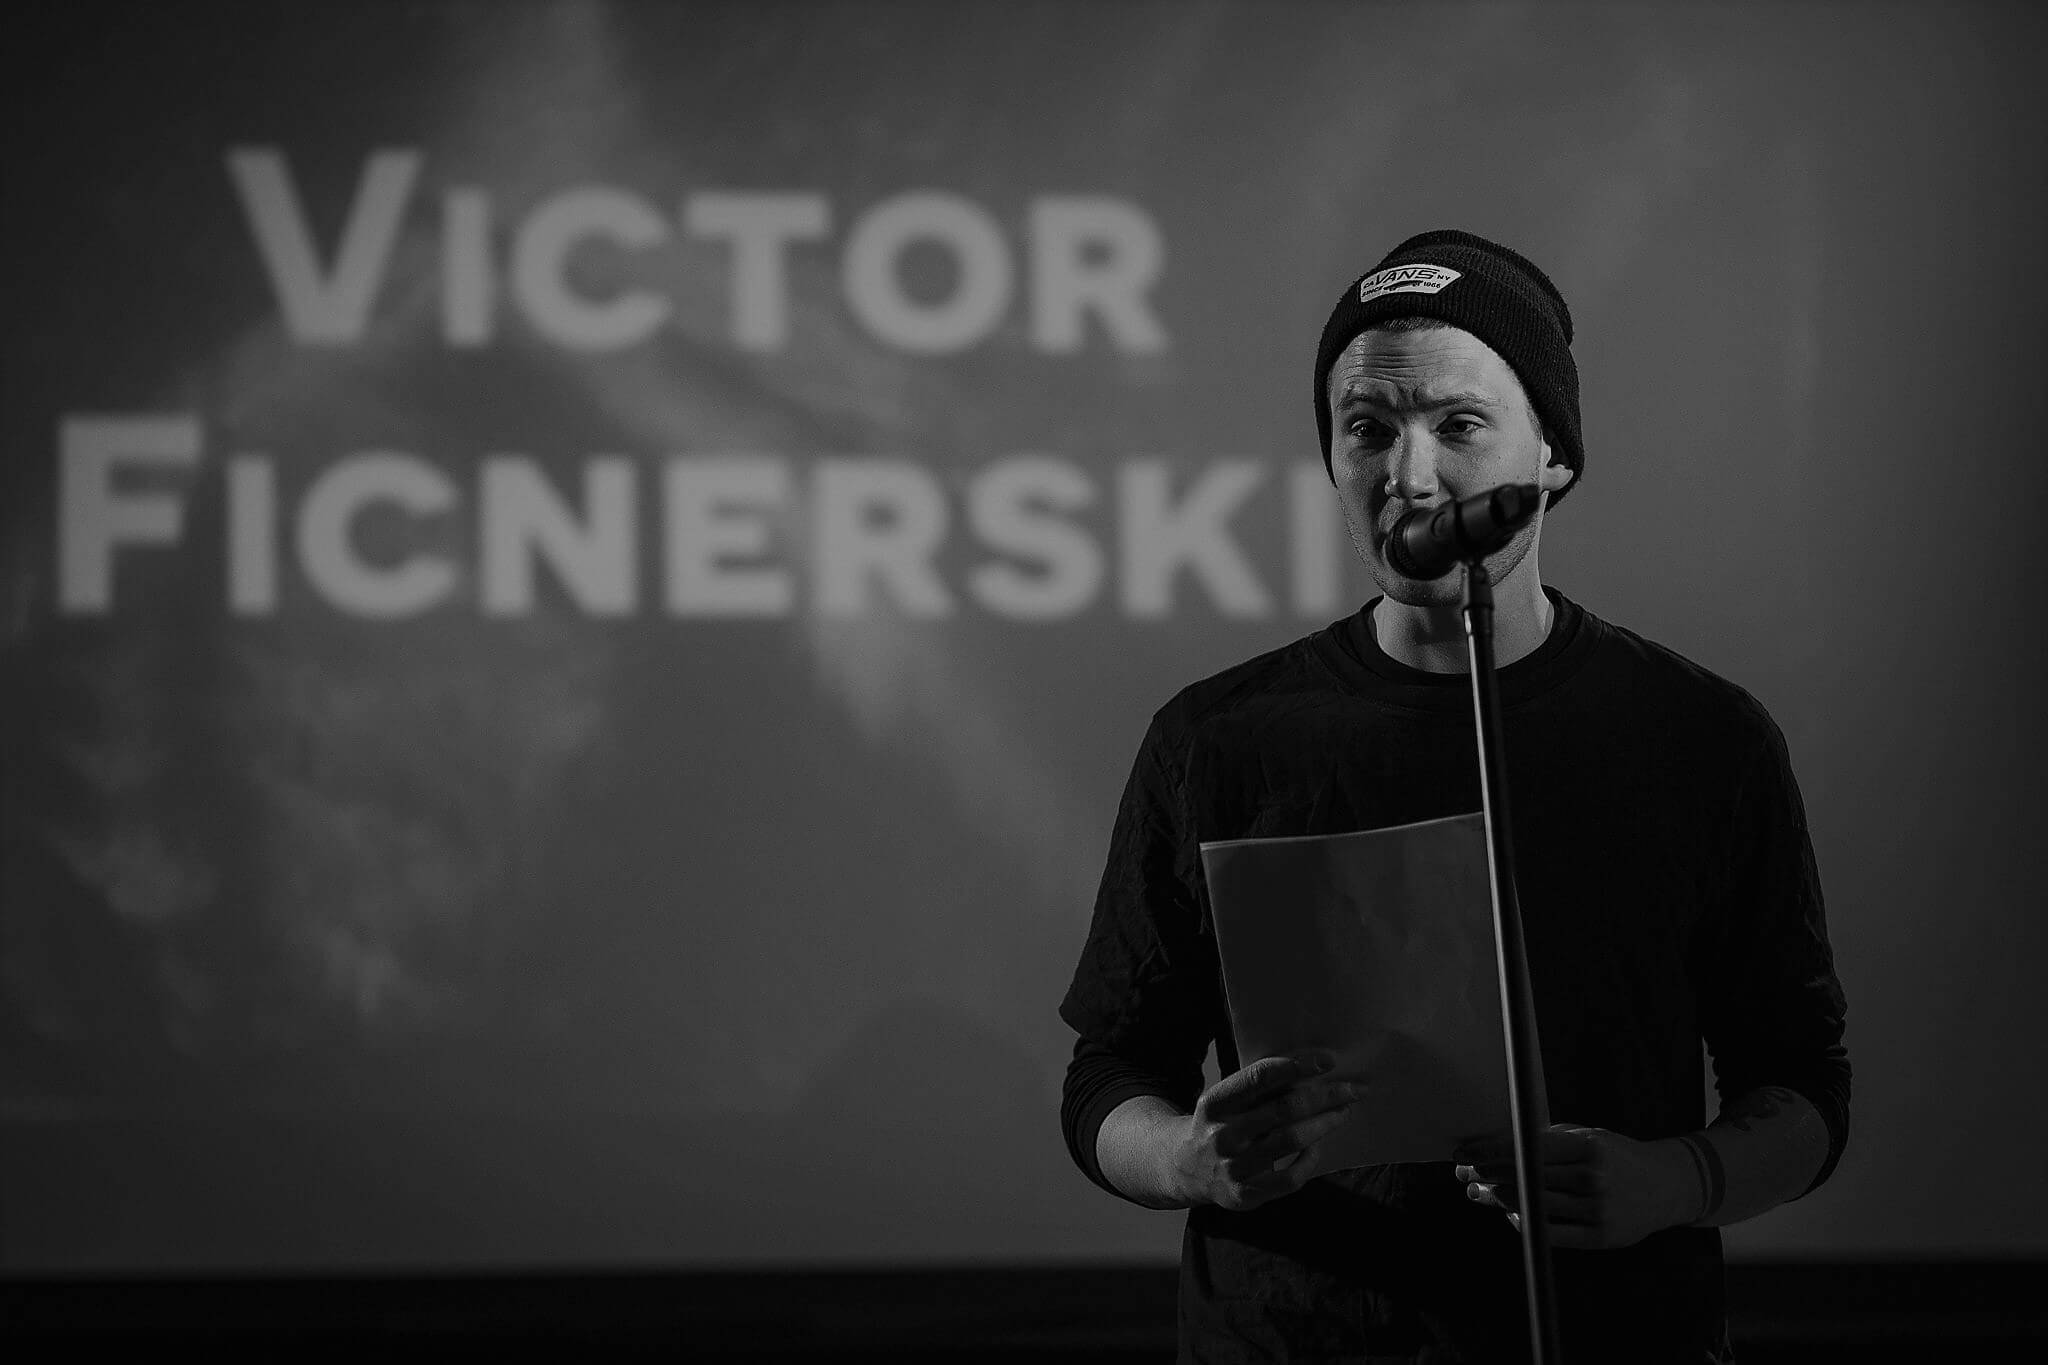 Victor Ficnerski